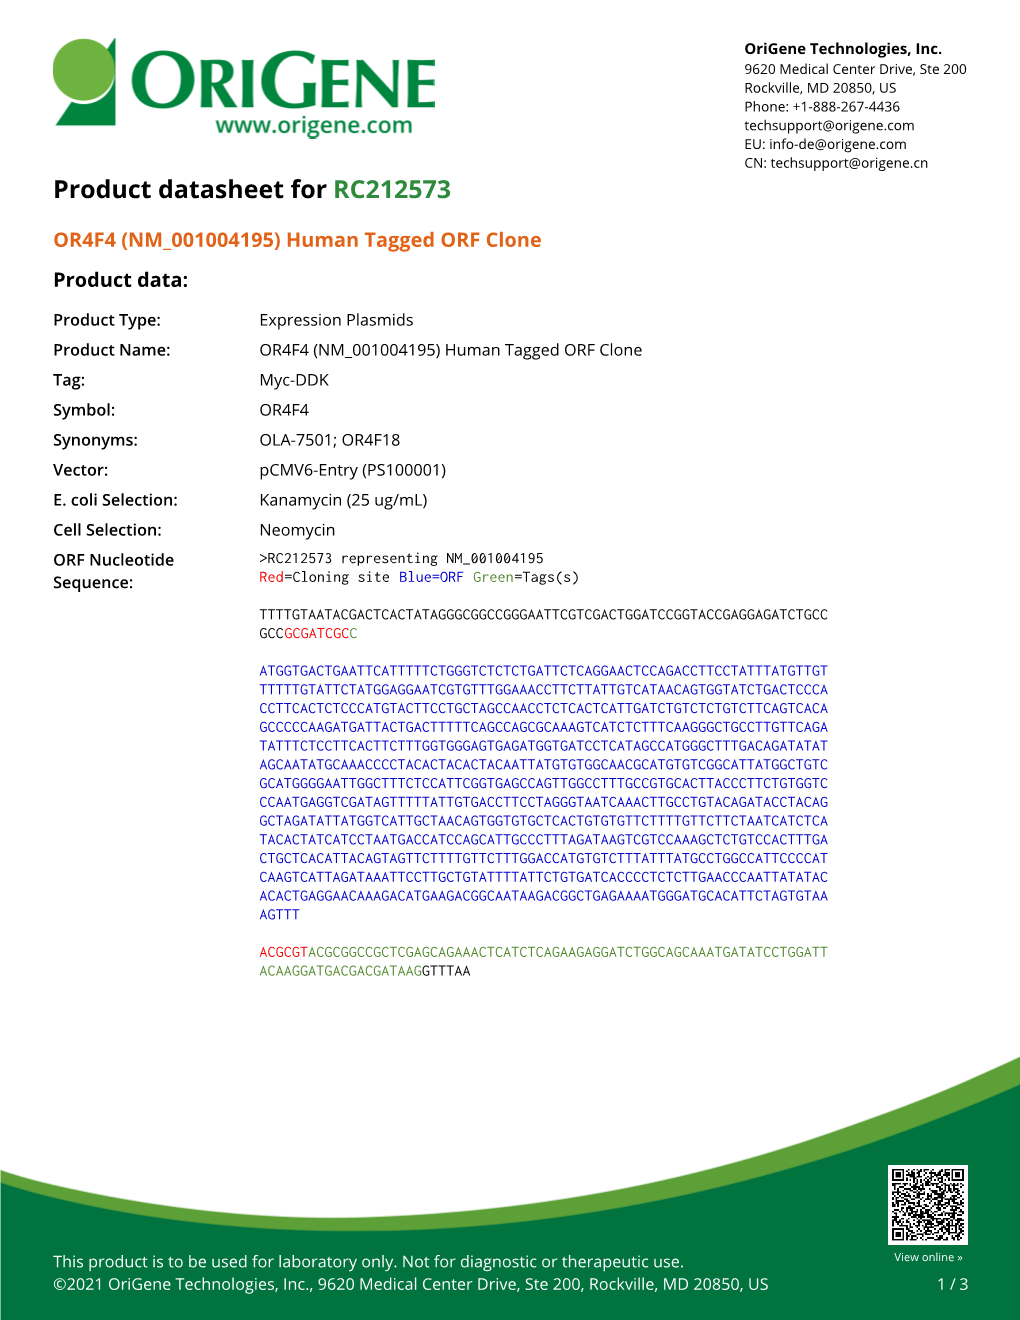 OR4F4 (NM 001004195) Human Tagged ORF Clone – RC212573